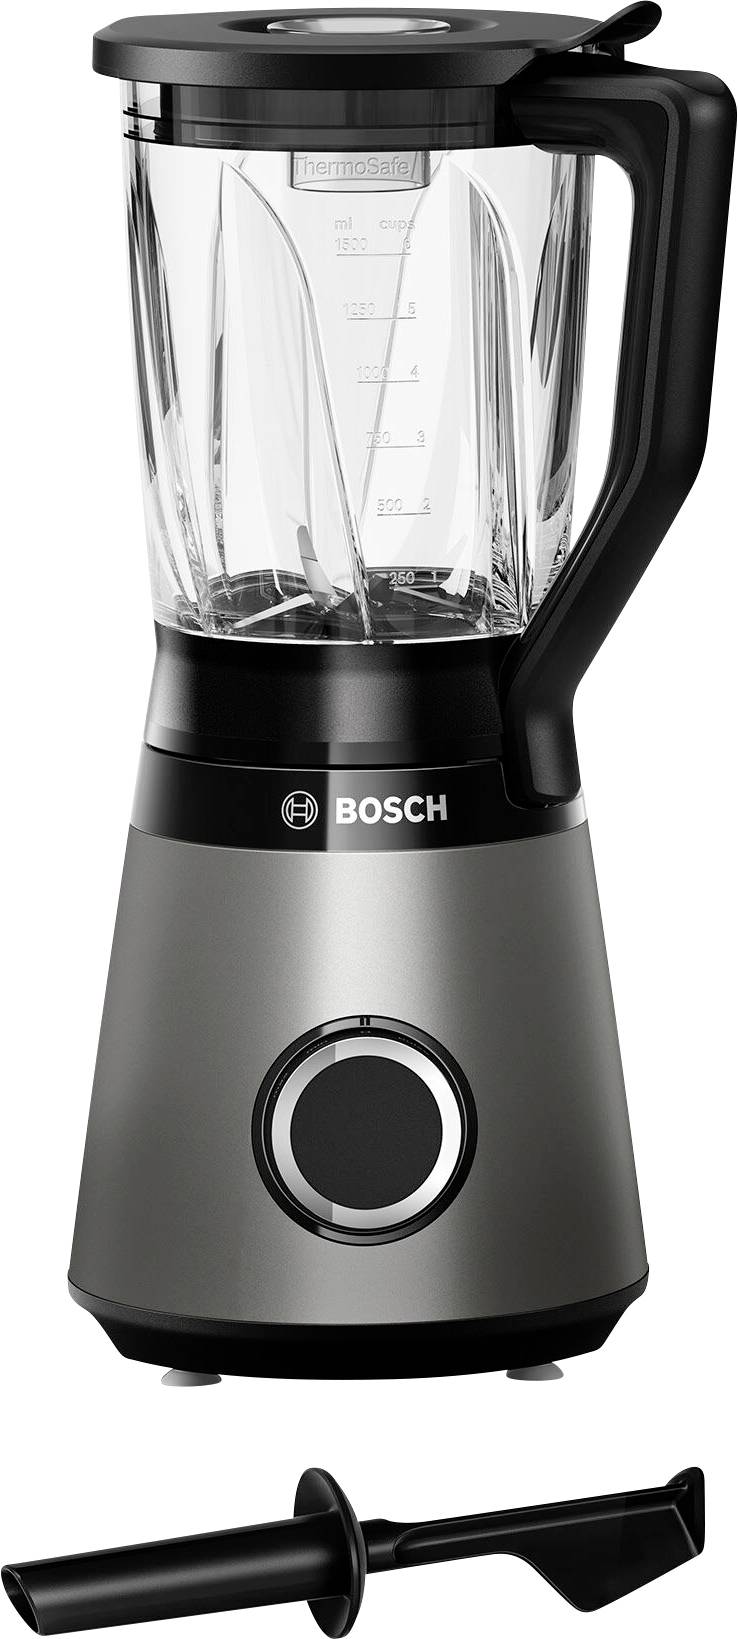 Bosch Haushalt MMB6172S Blender 1200 W Silver Conrad.com